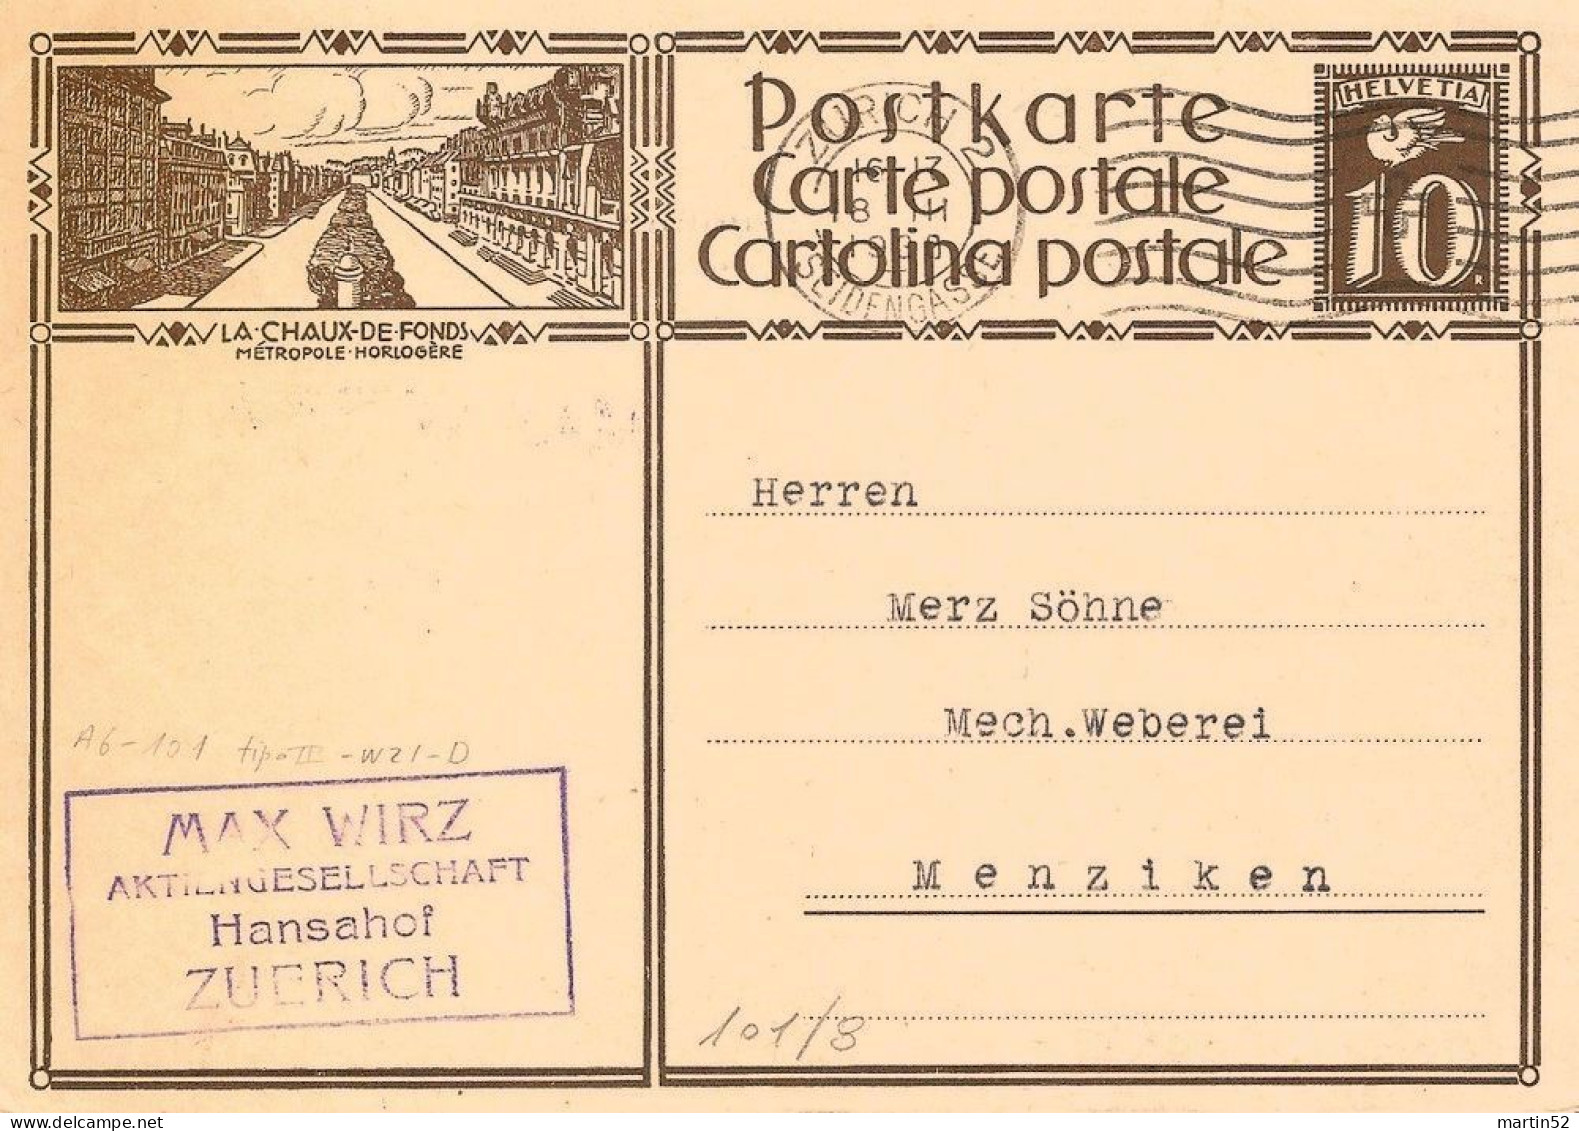 Schweiz Suisse 1930: Bild-PK CPI  LA CHAUX-DE-FONDS MÉTROPOLE HORLOGÈRE Mit Stempel ZÜRICH 18.III.1930 - Horlogerie